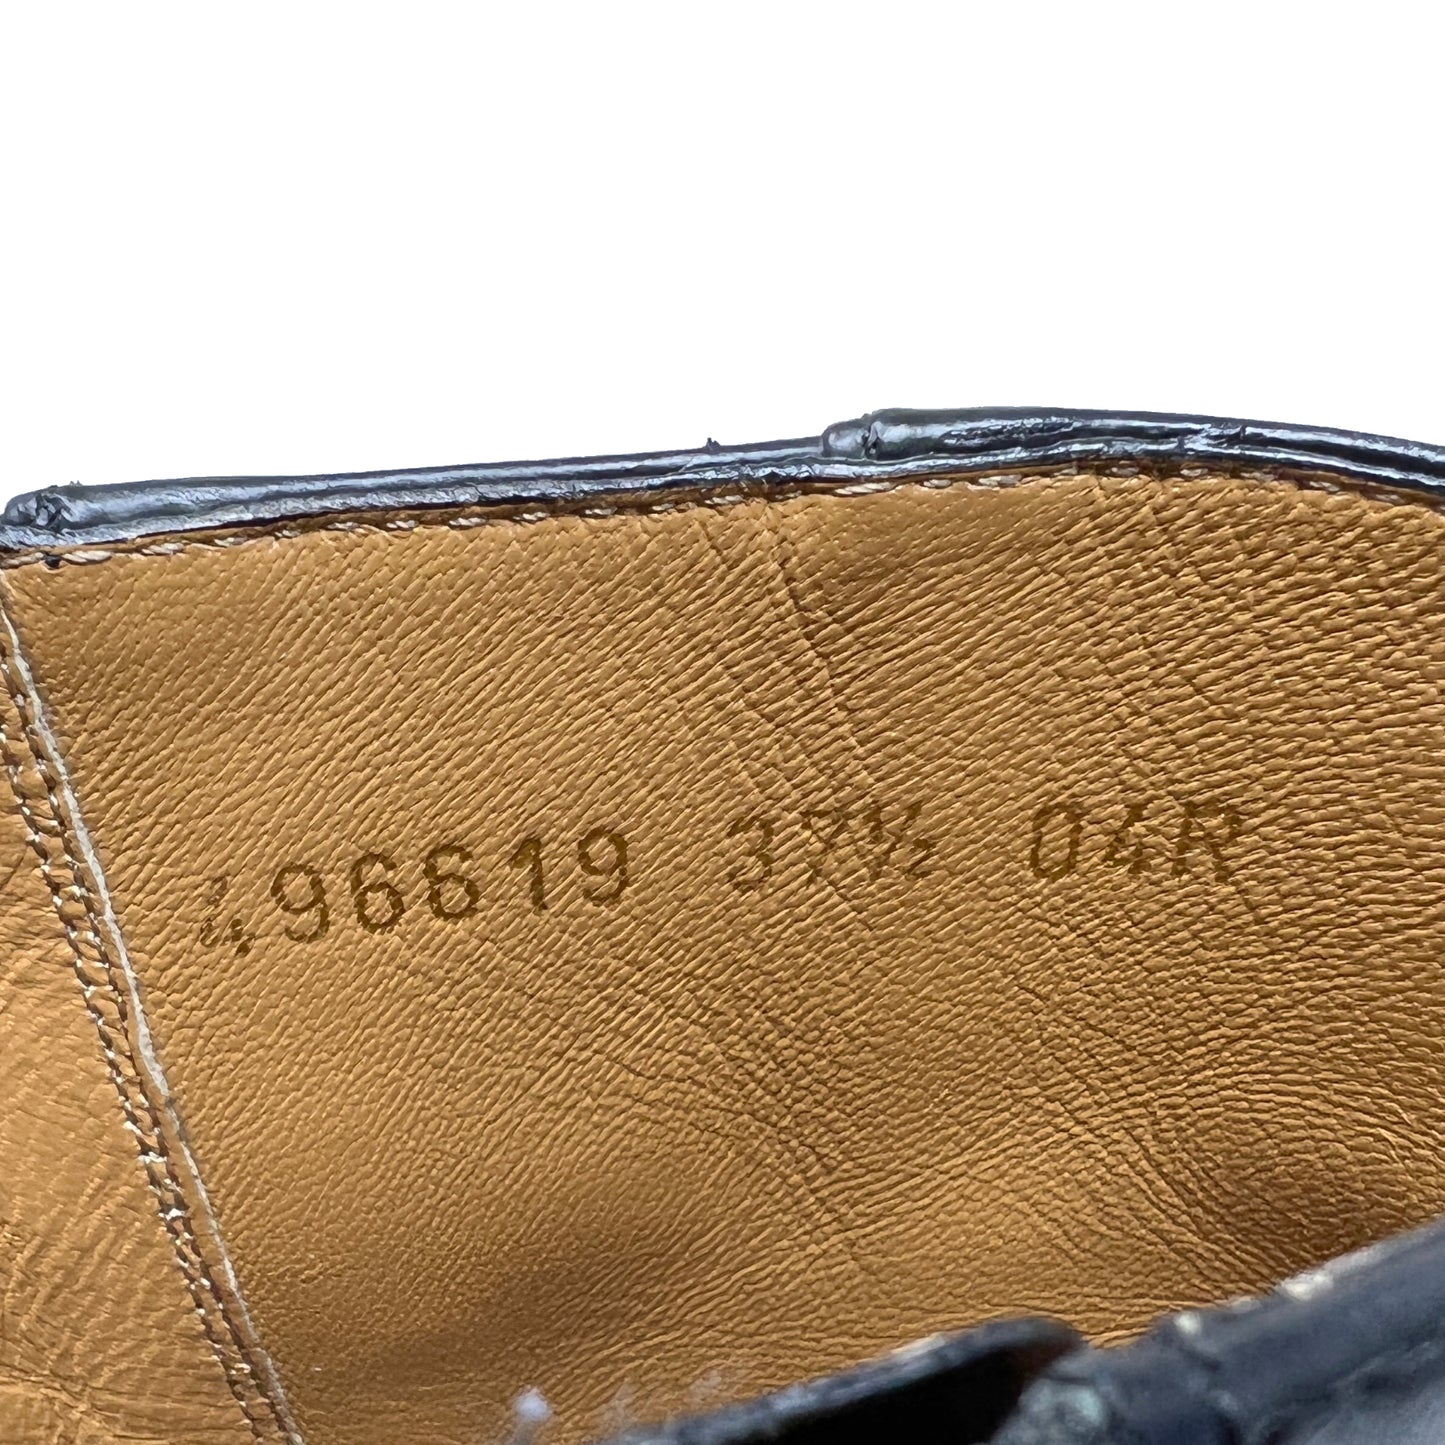 Gucci Jordaan Horsebit Black Leather Round Toe Zip Up Flat Ankle Boots Size EU 37.5